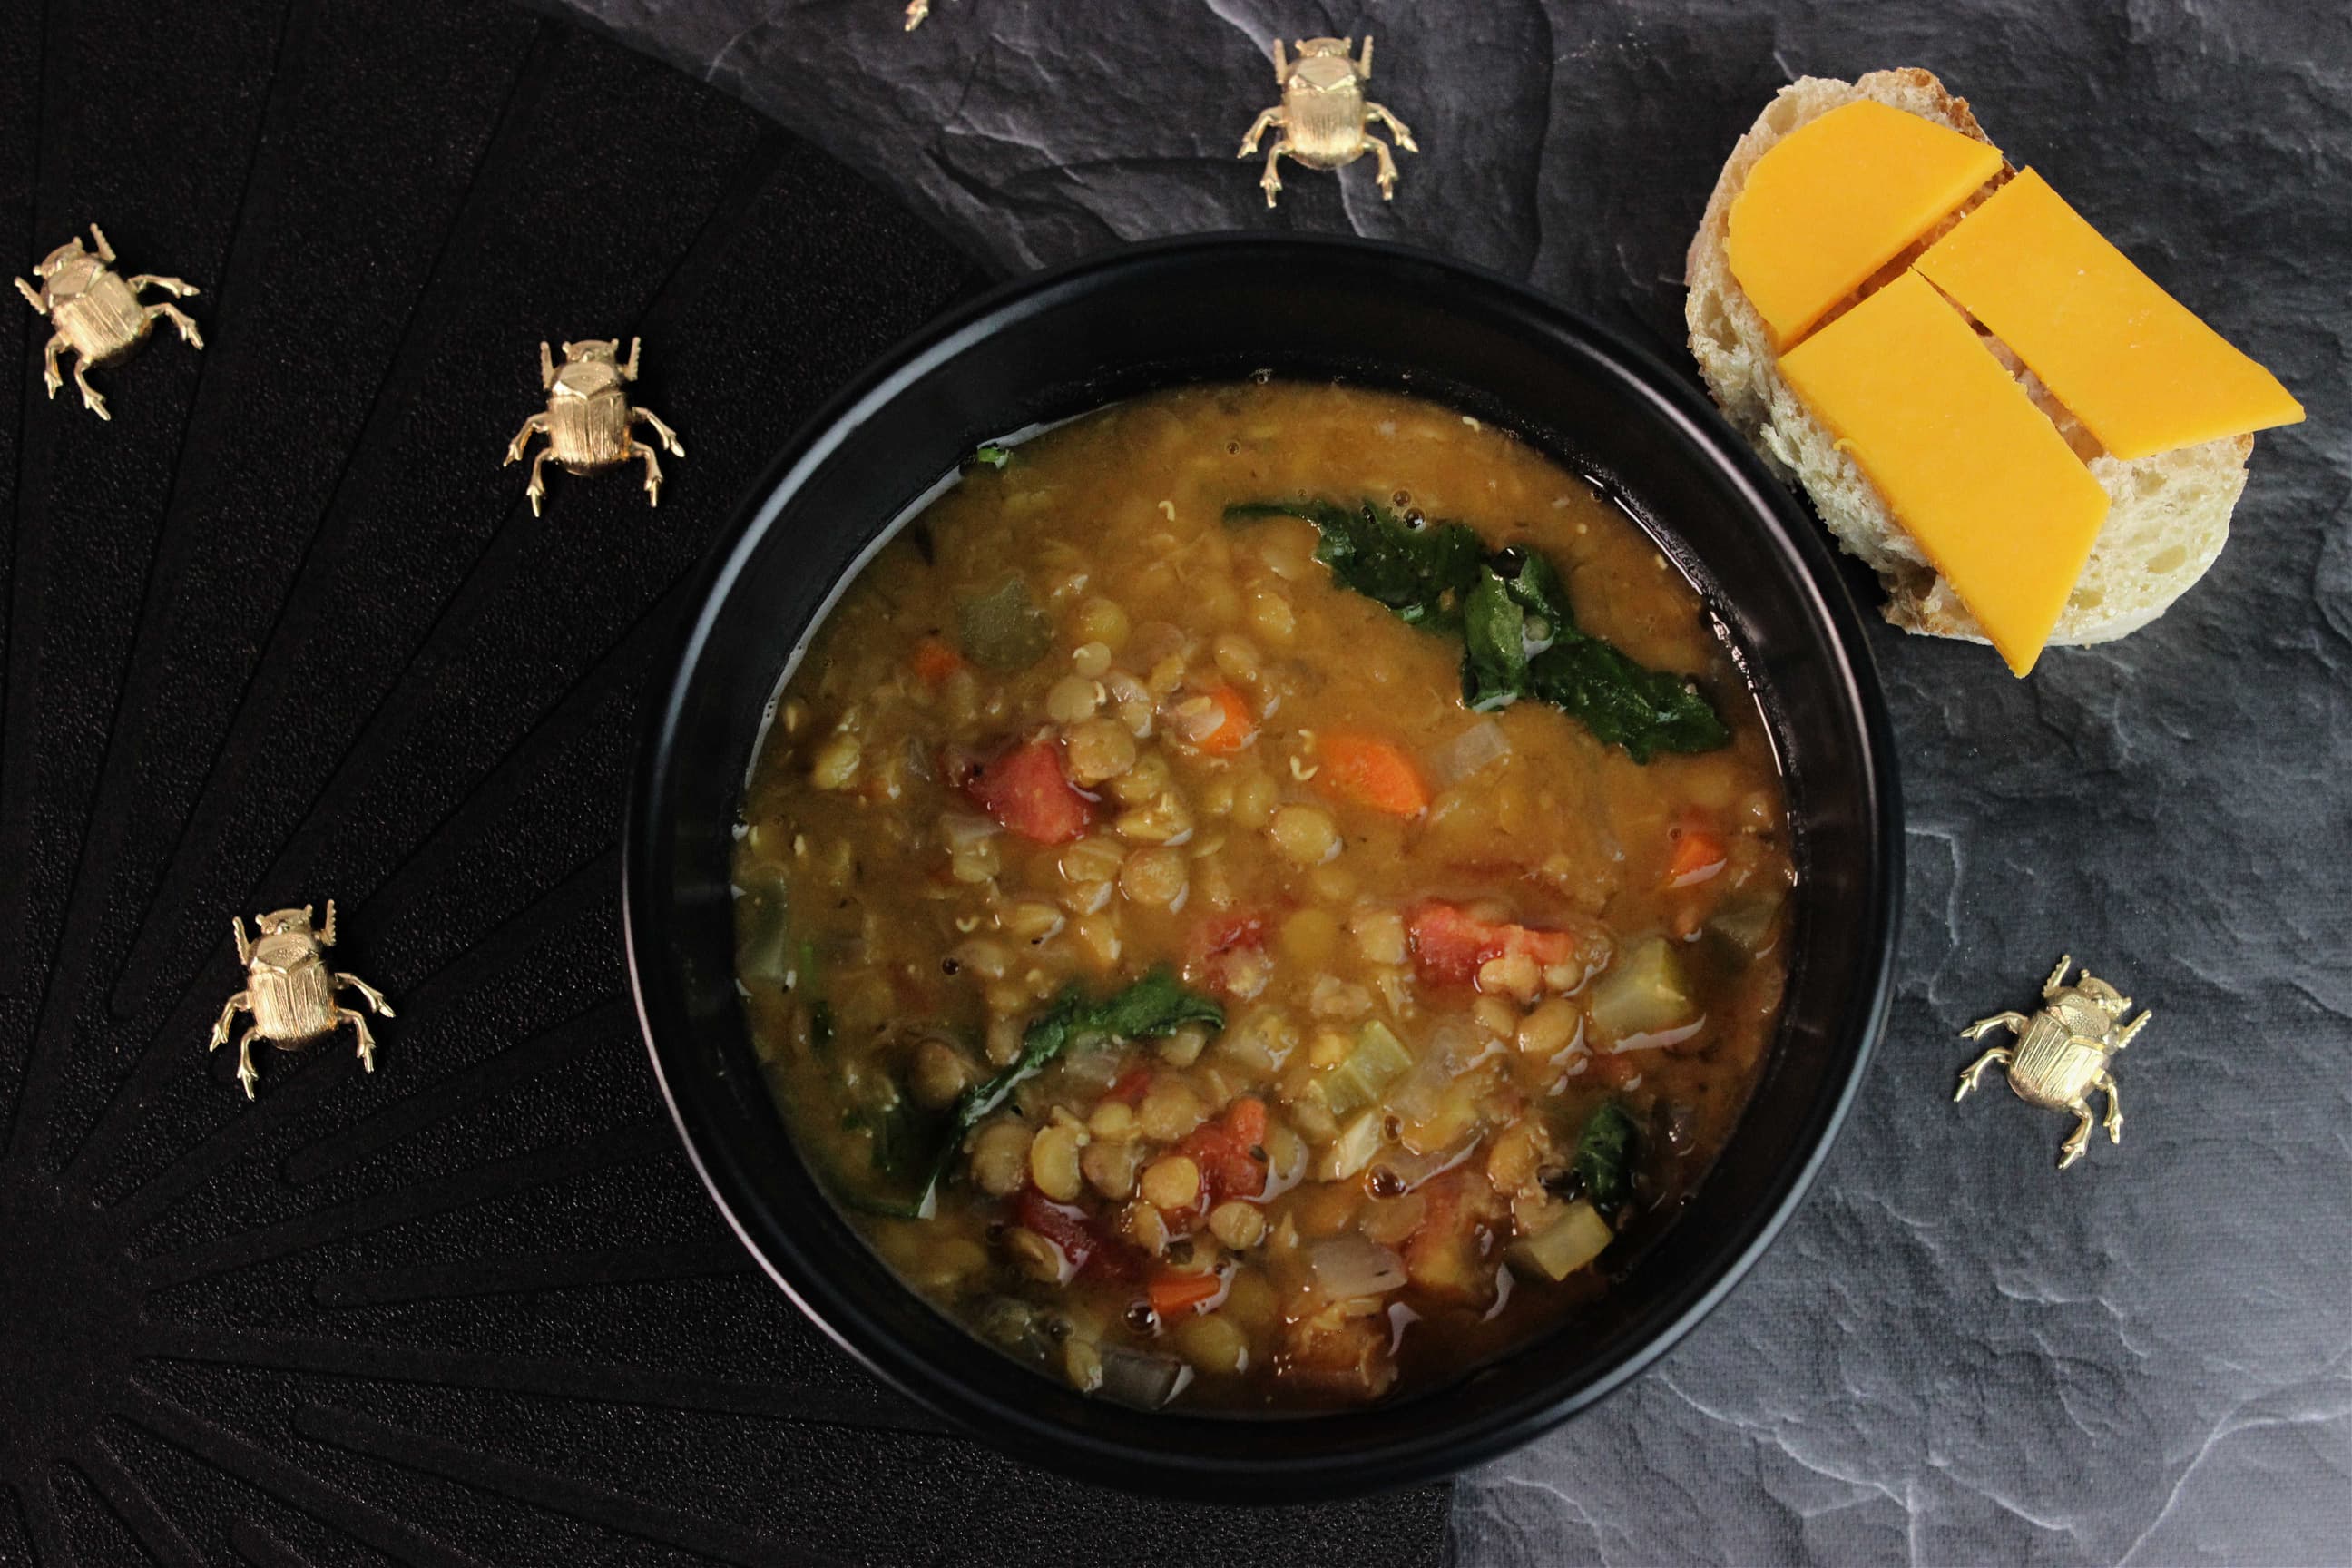 Moon Knight-Inspired Lentil Soup Recipe by Jenn Fujikawa